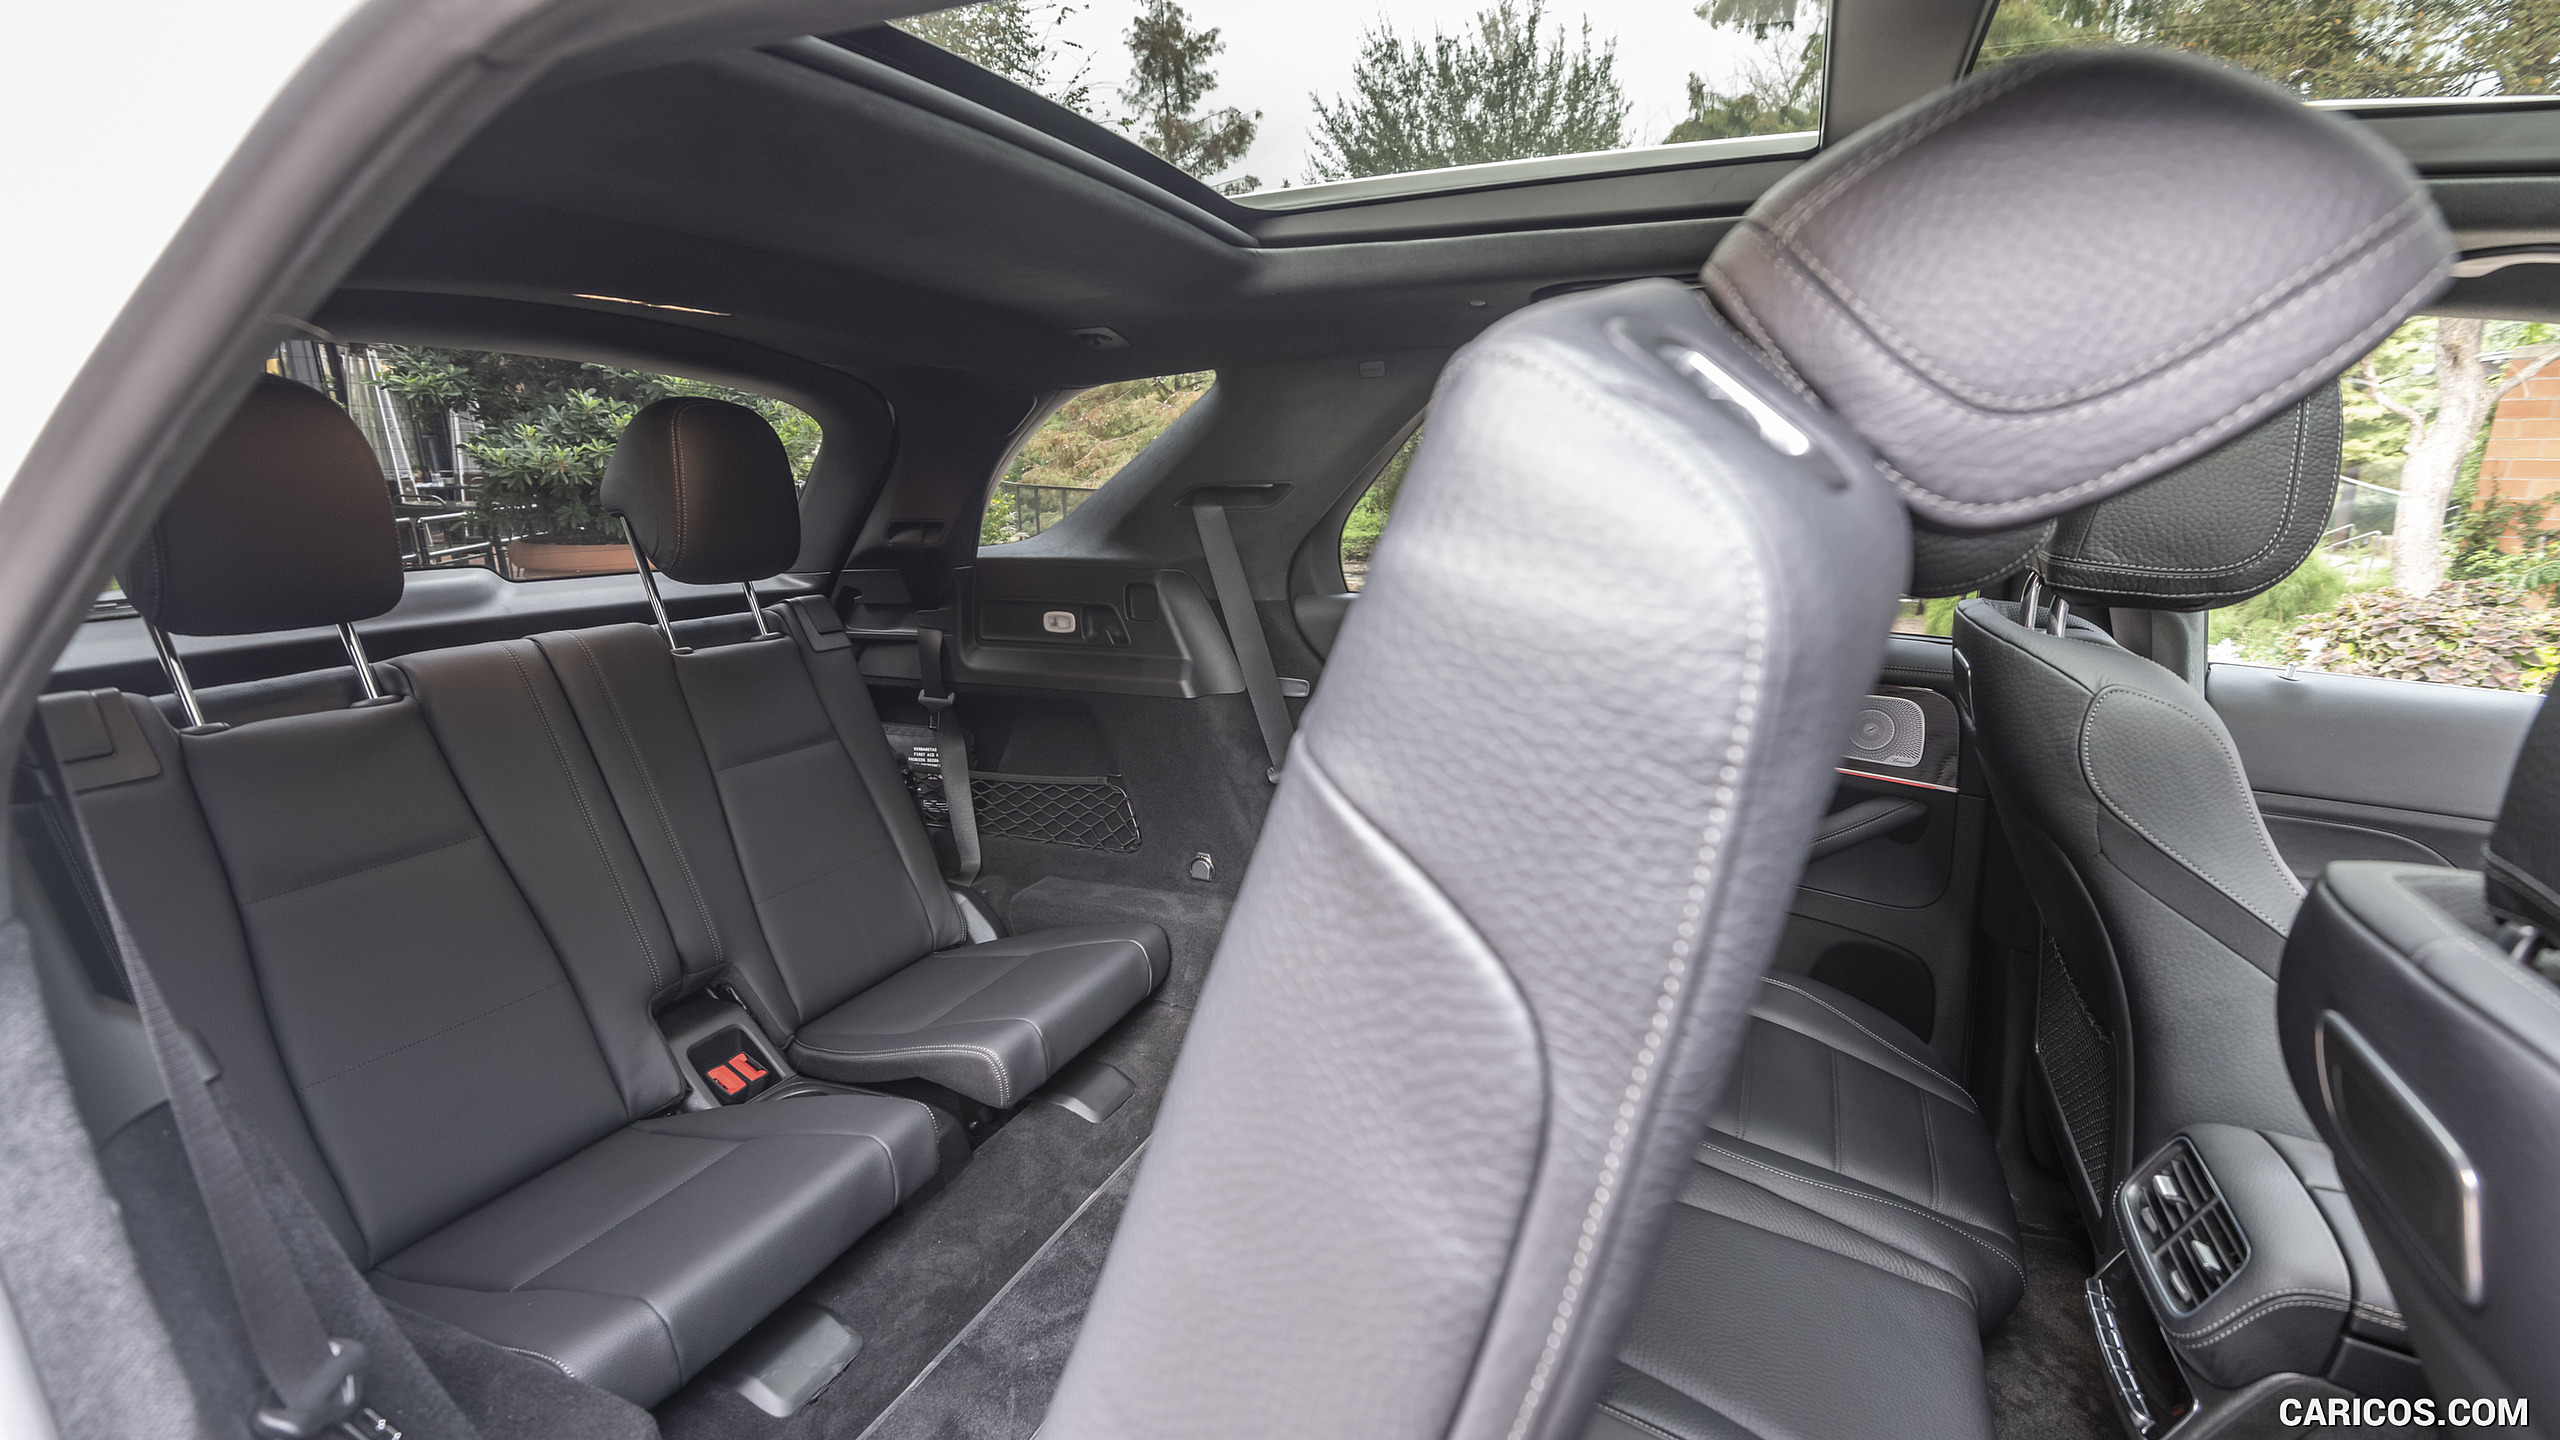 2020 Mercedes-Benz GLE 450 4MATIC (Color: Designo Diamond White Bright; US-Spec) - Interior, Third Row Seats, #170 of 358